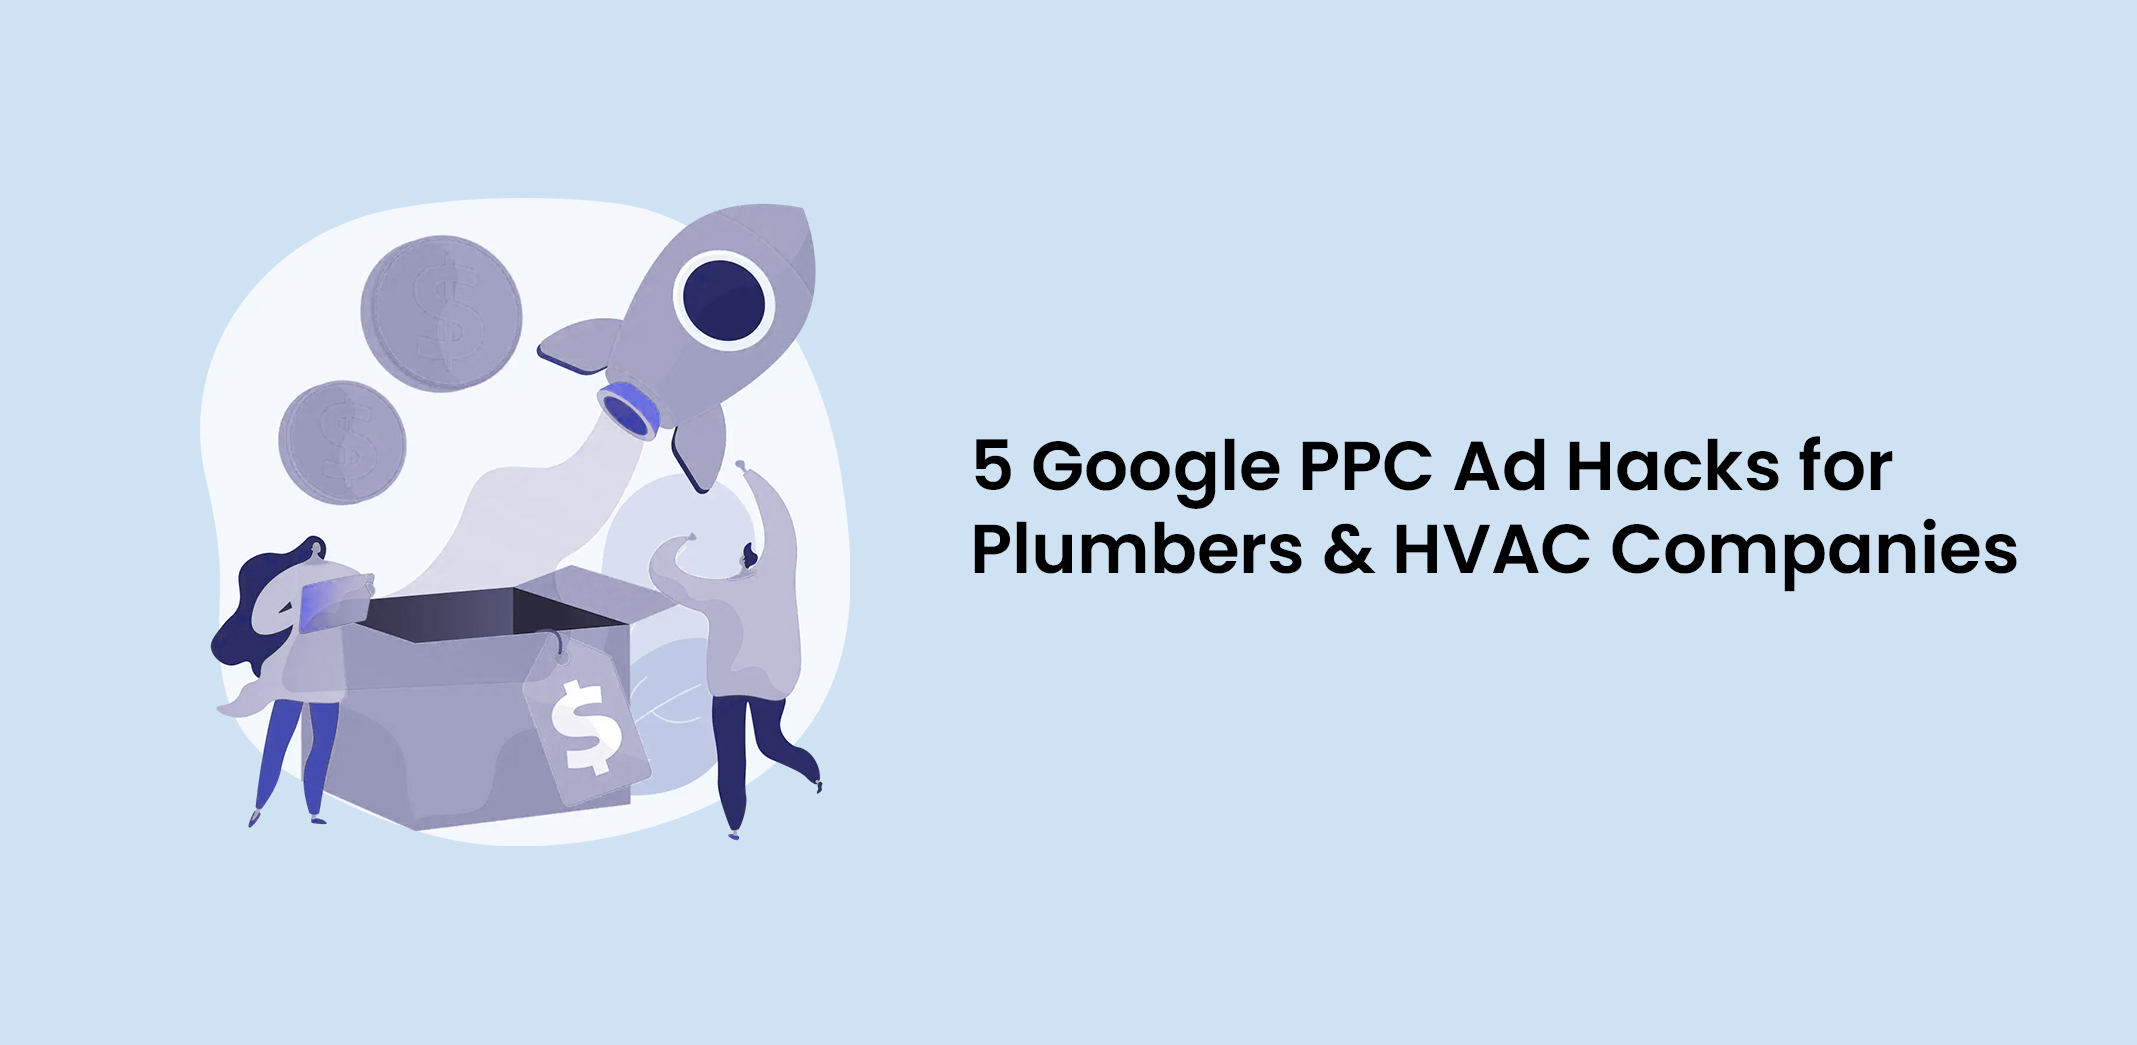 5 Google PPC Ad Hacks for Plumbers & HVAC Companies